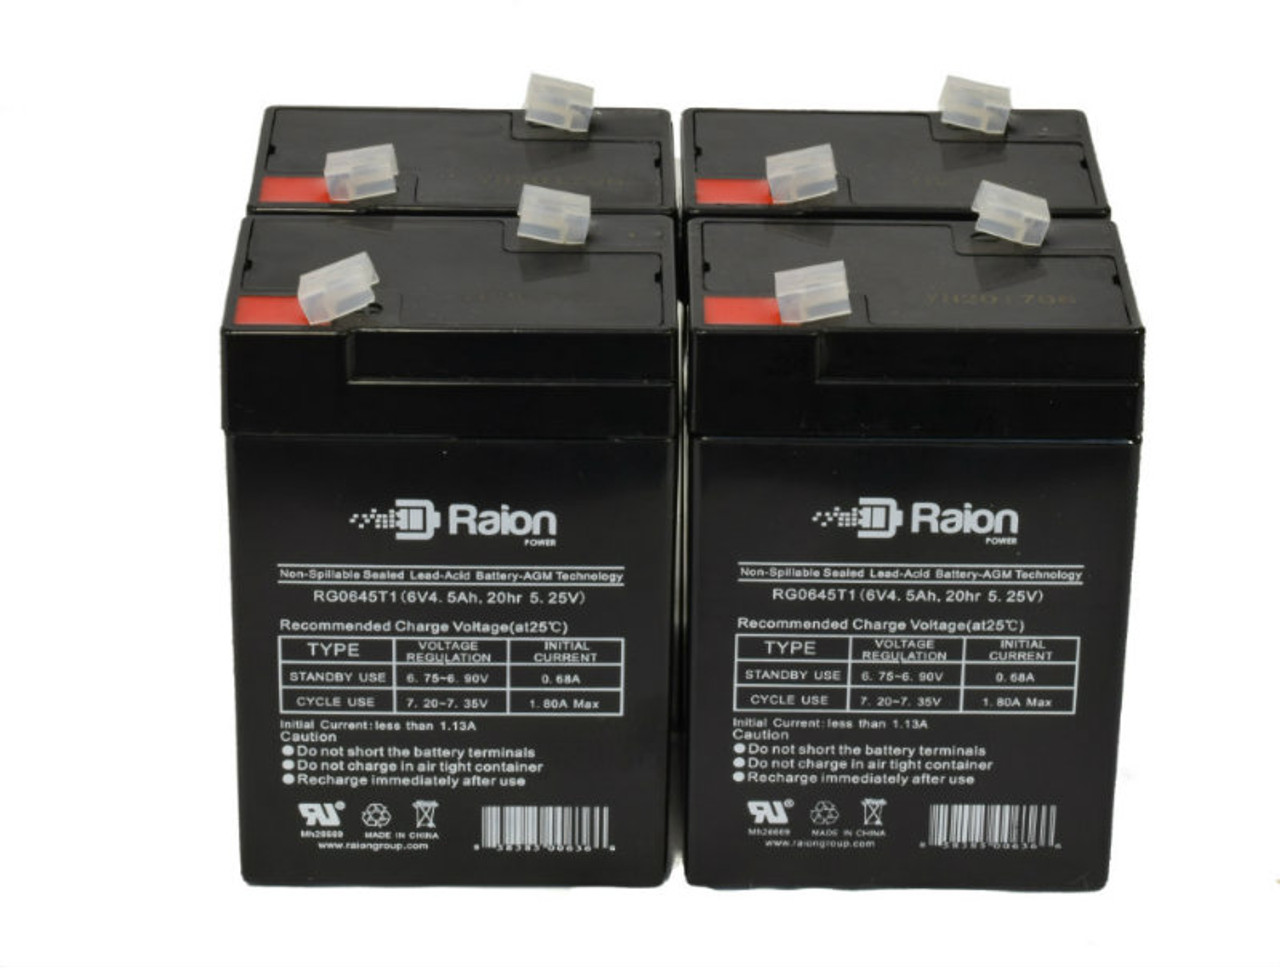 Raion Power 6V 4.5Ah Replacement Emergency Light Battery for Sure-Lites / Cooper Lighting SL-26-78 - 4 Pack